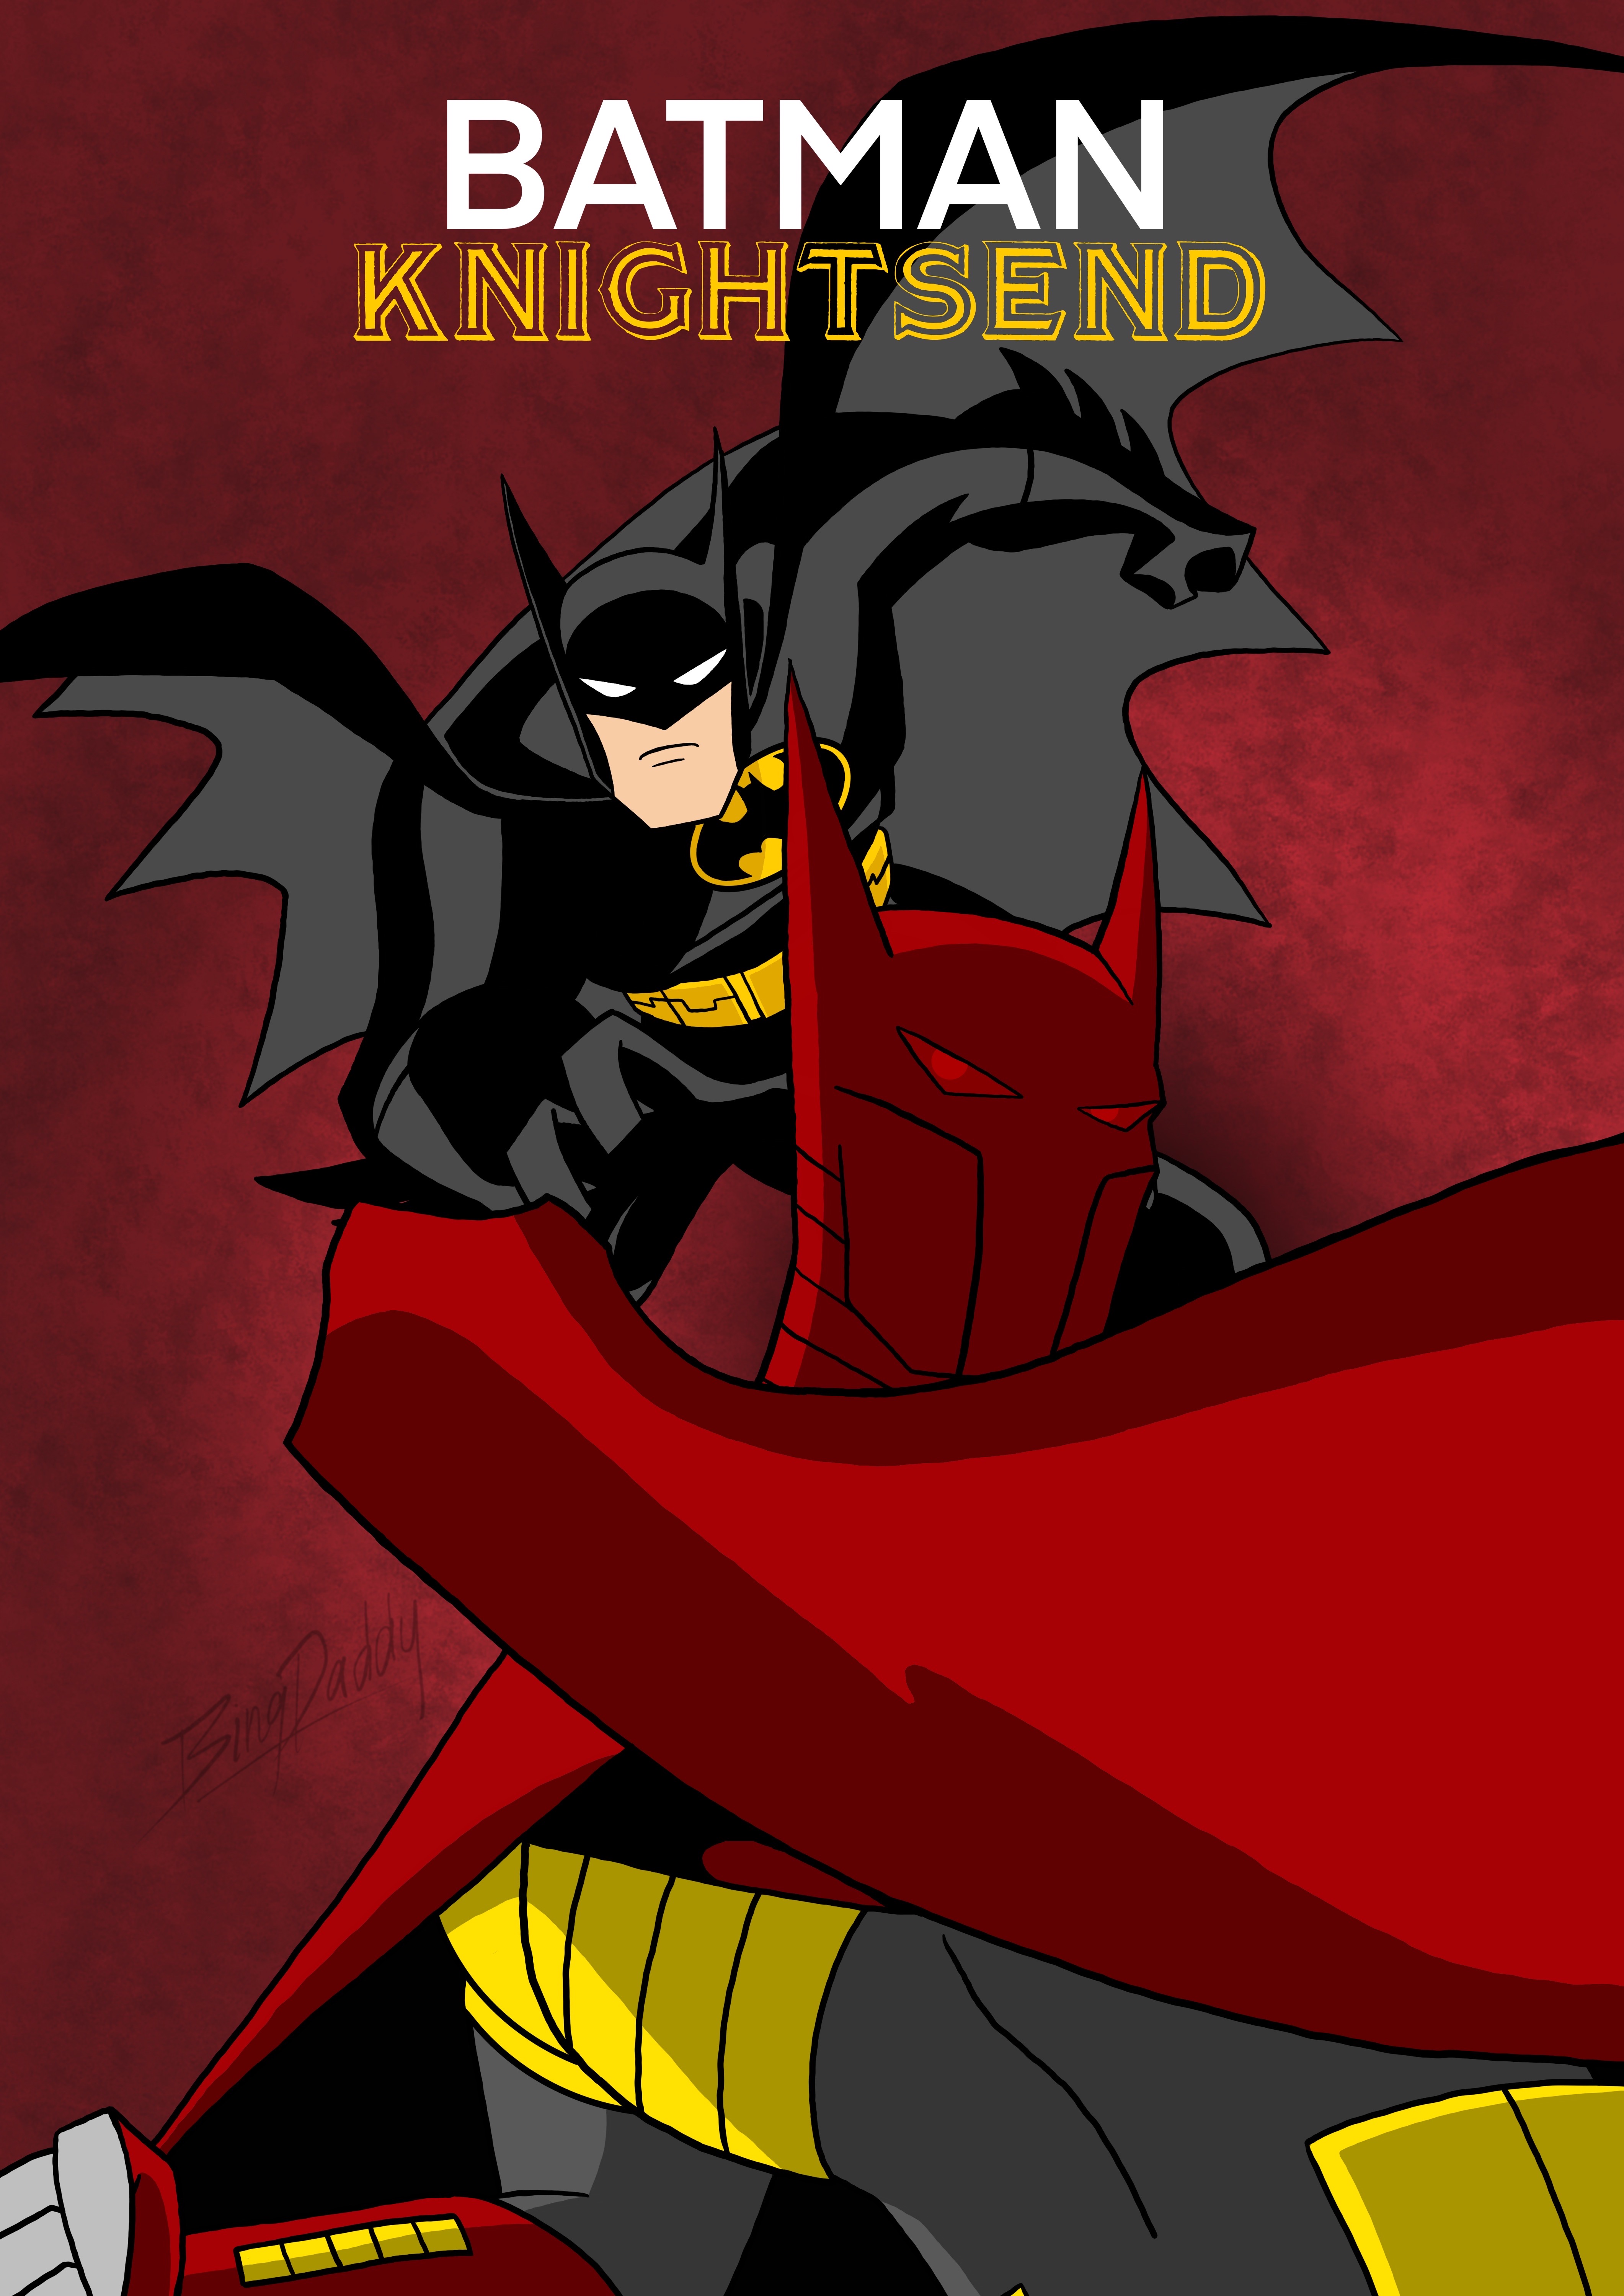 LJV Batman KnightsEnd art by JamesBingDaddy on DeviantArt